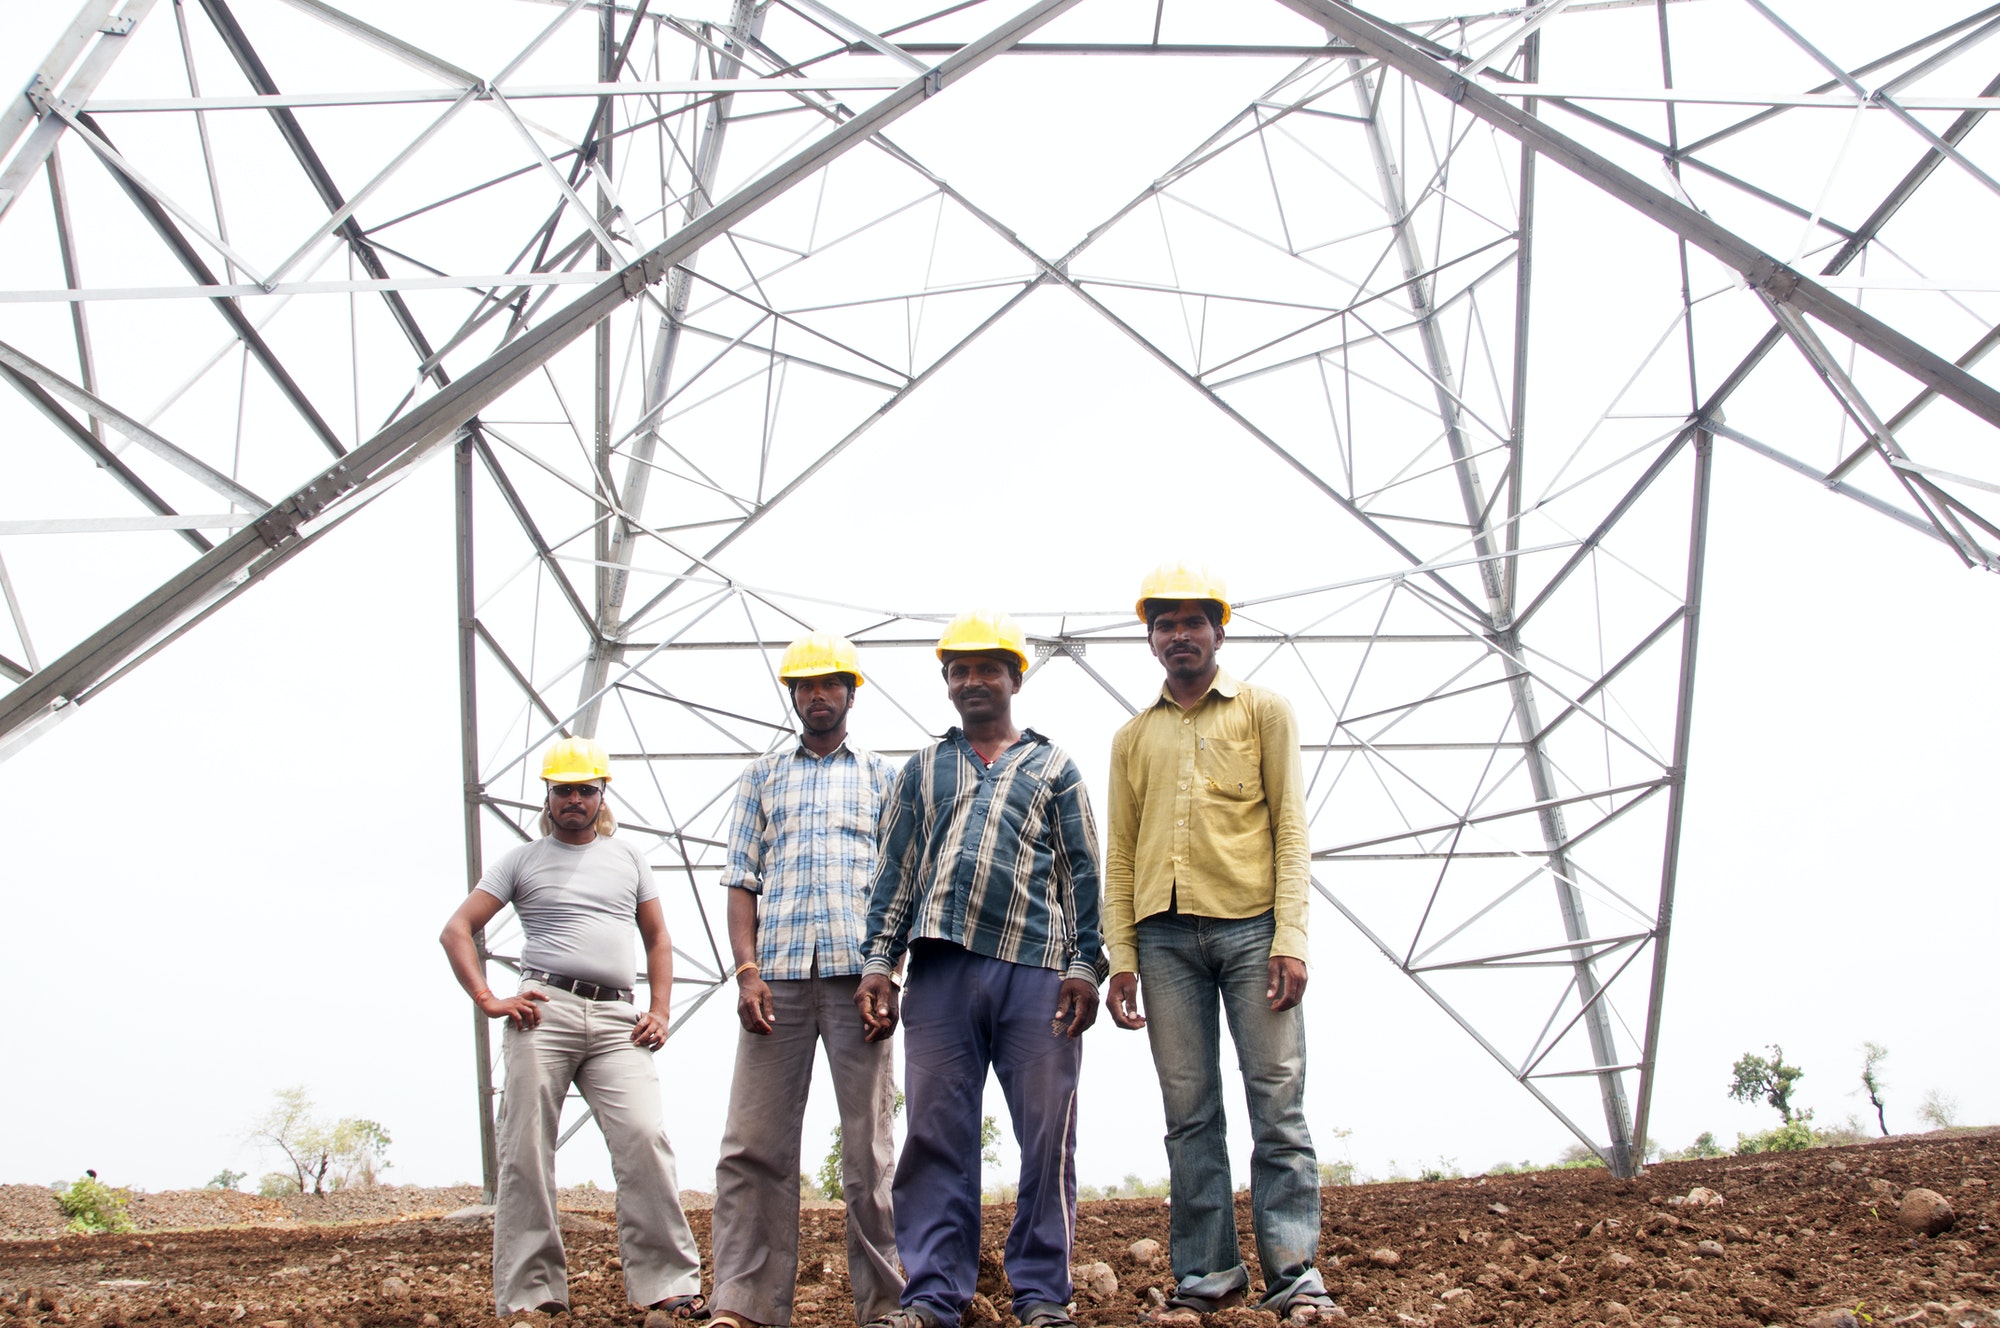 Portrait of Pylon construction workers, India.